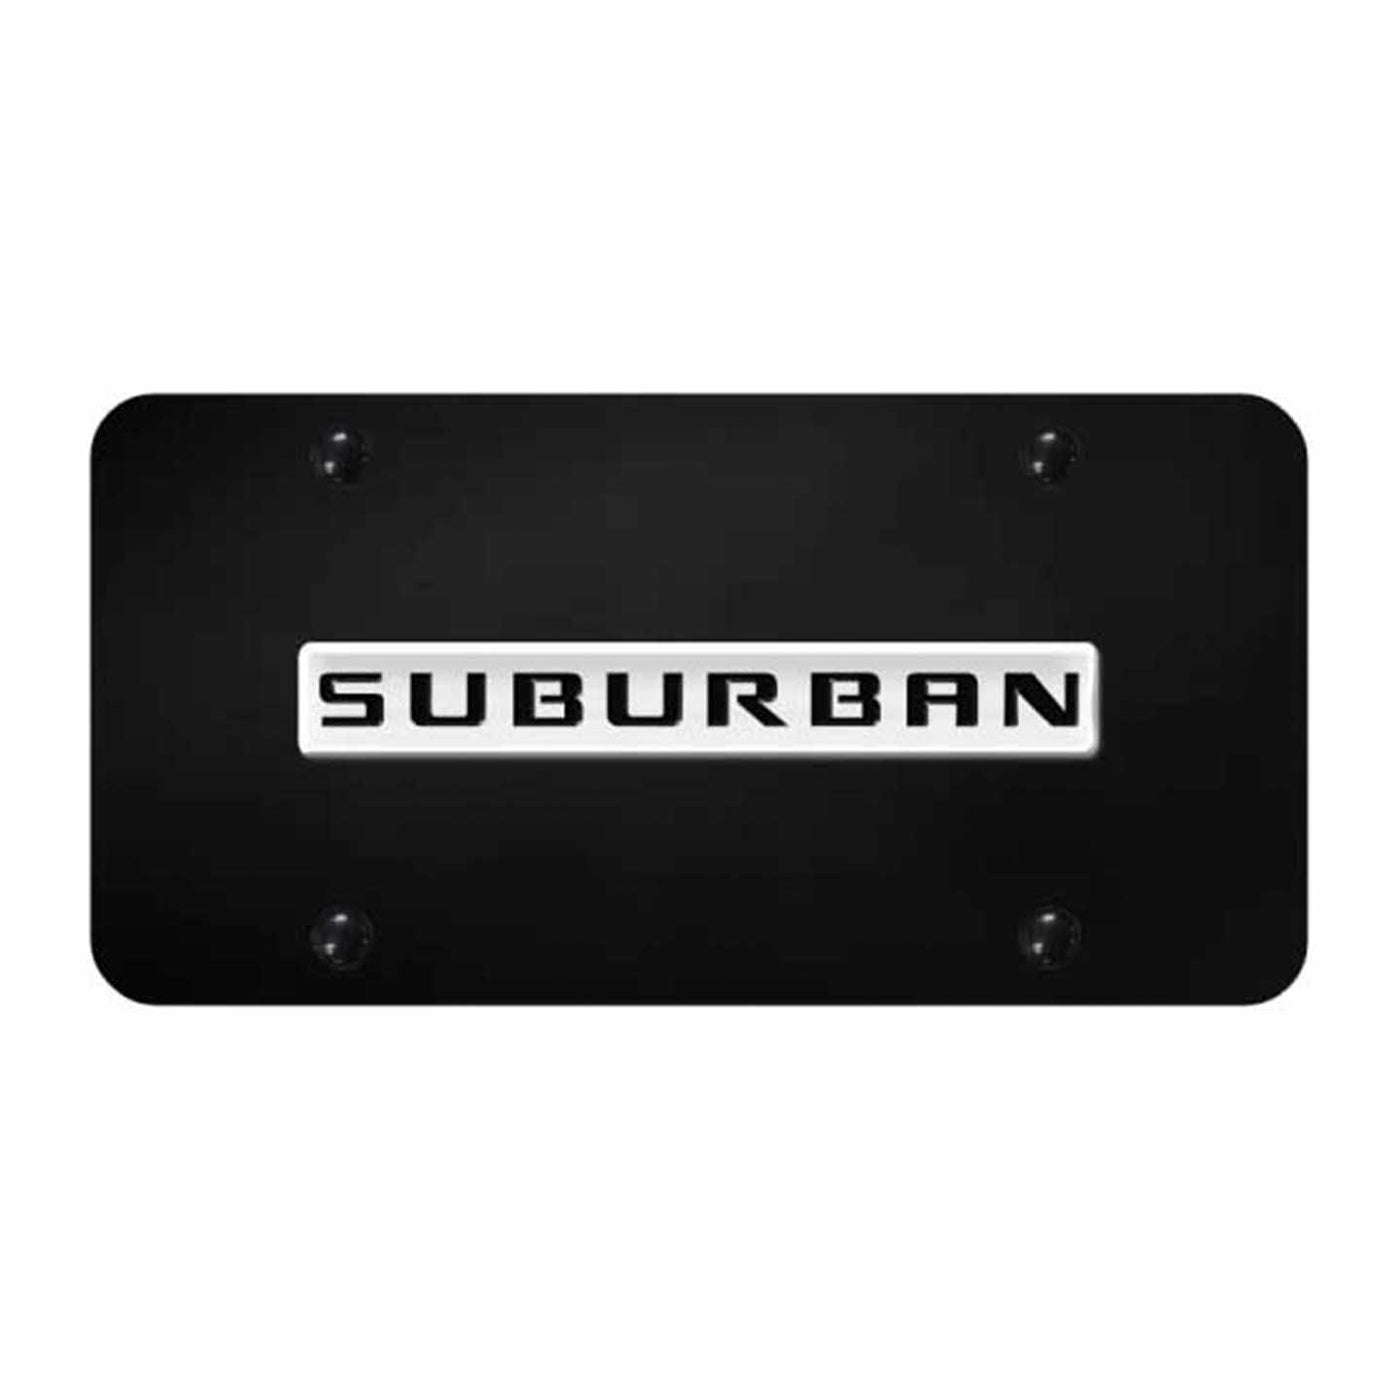 Suburban Name License Plate - Chrome on Black